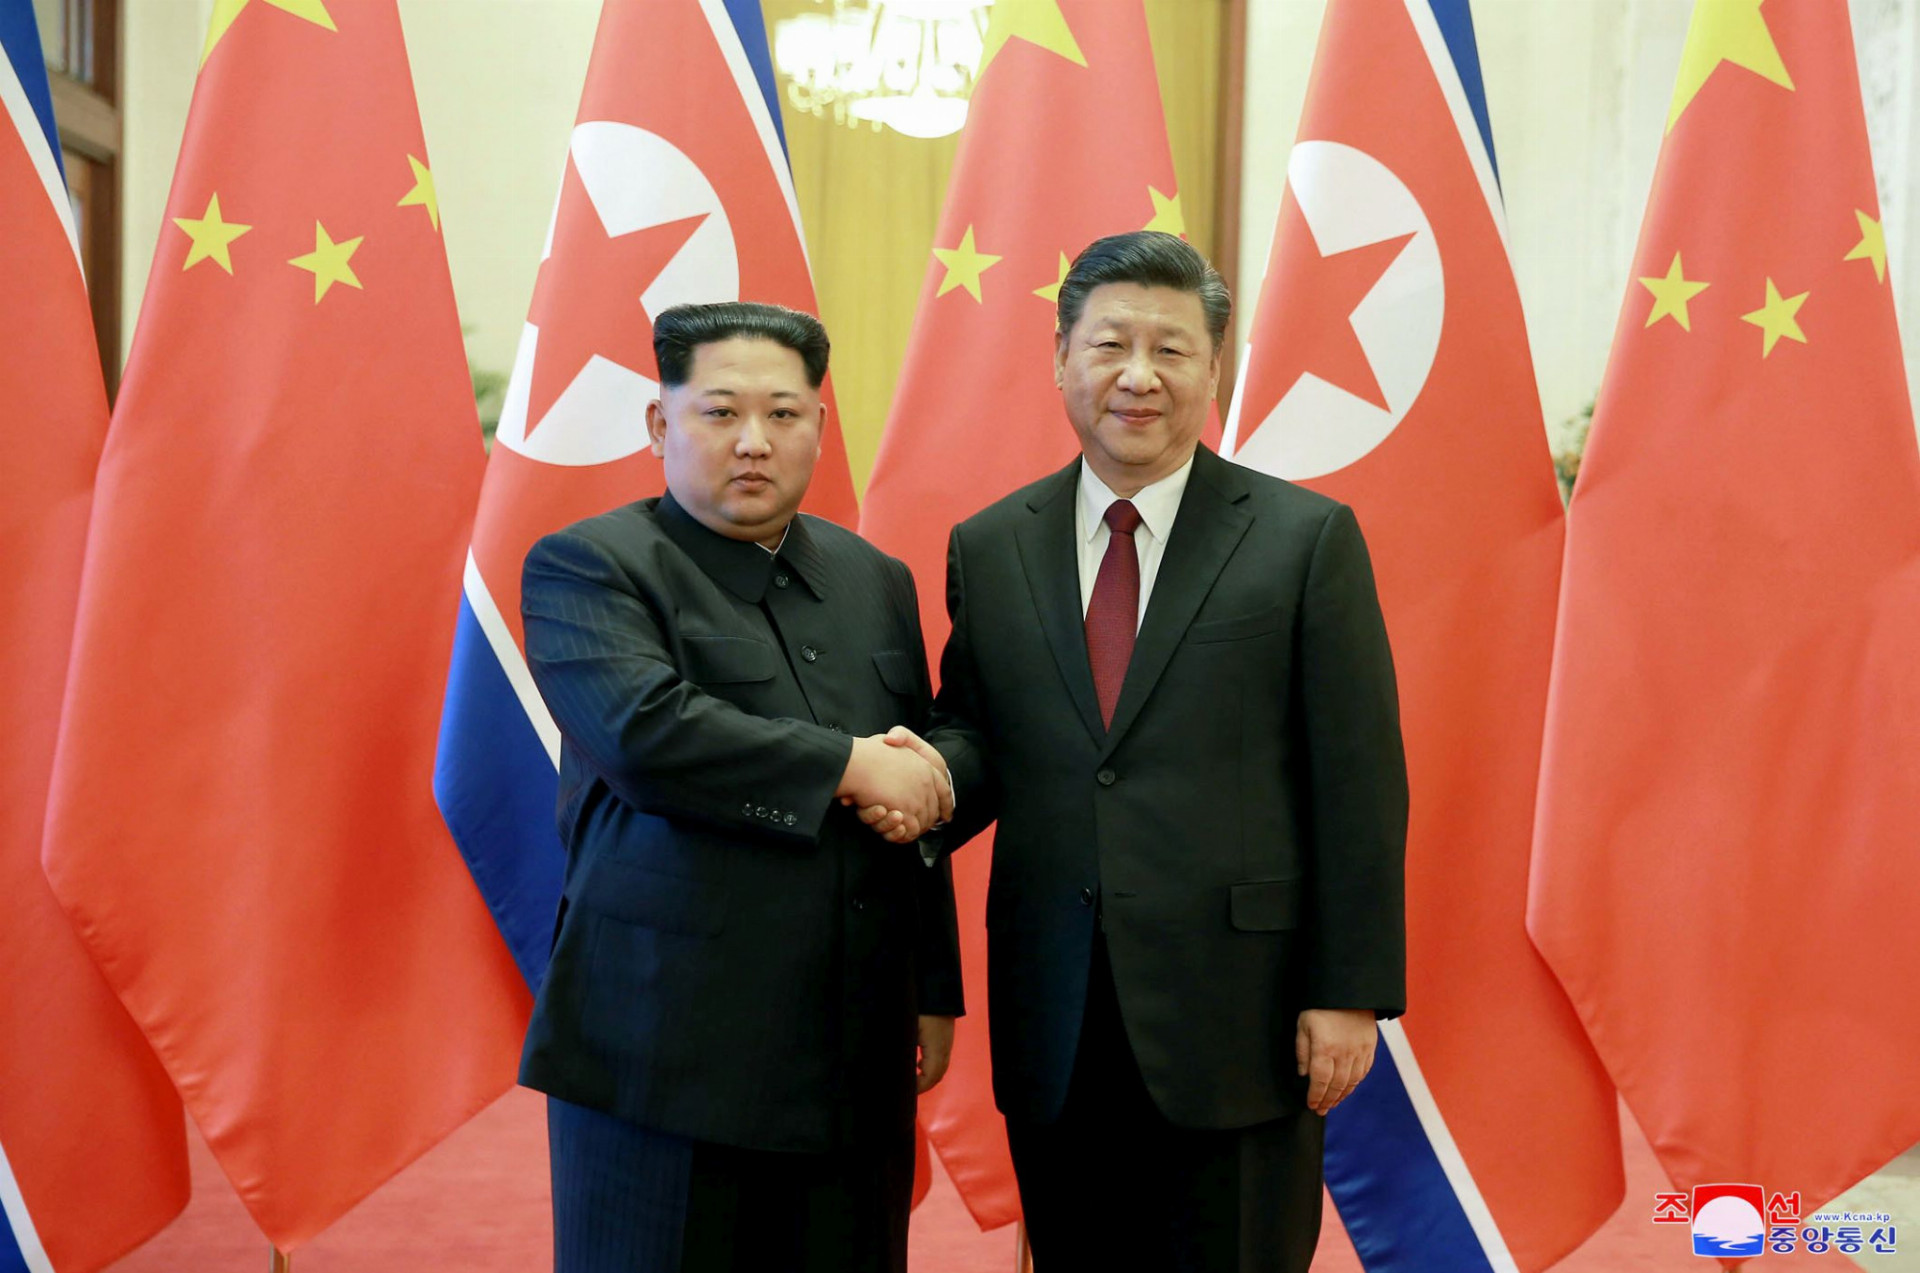 Cesta do Číny bola prvou zahraničnou cestou severokórejského
lídra.